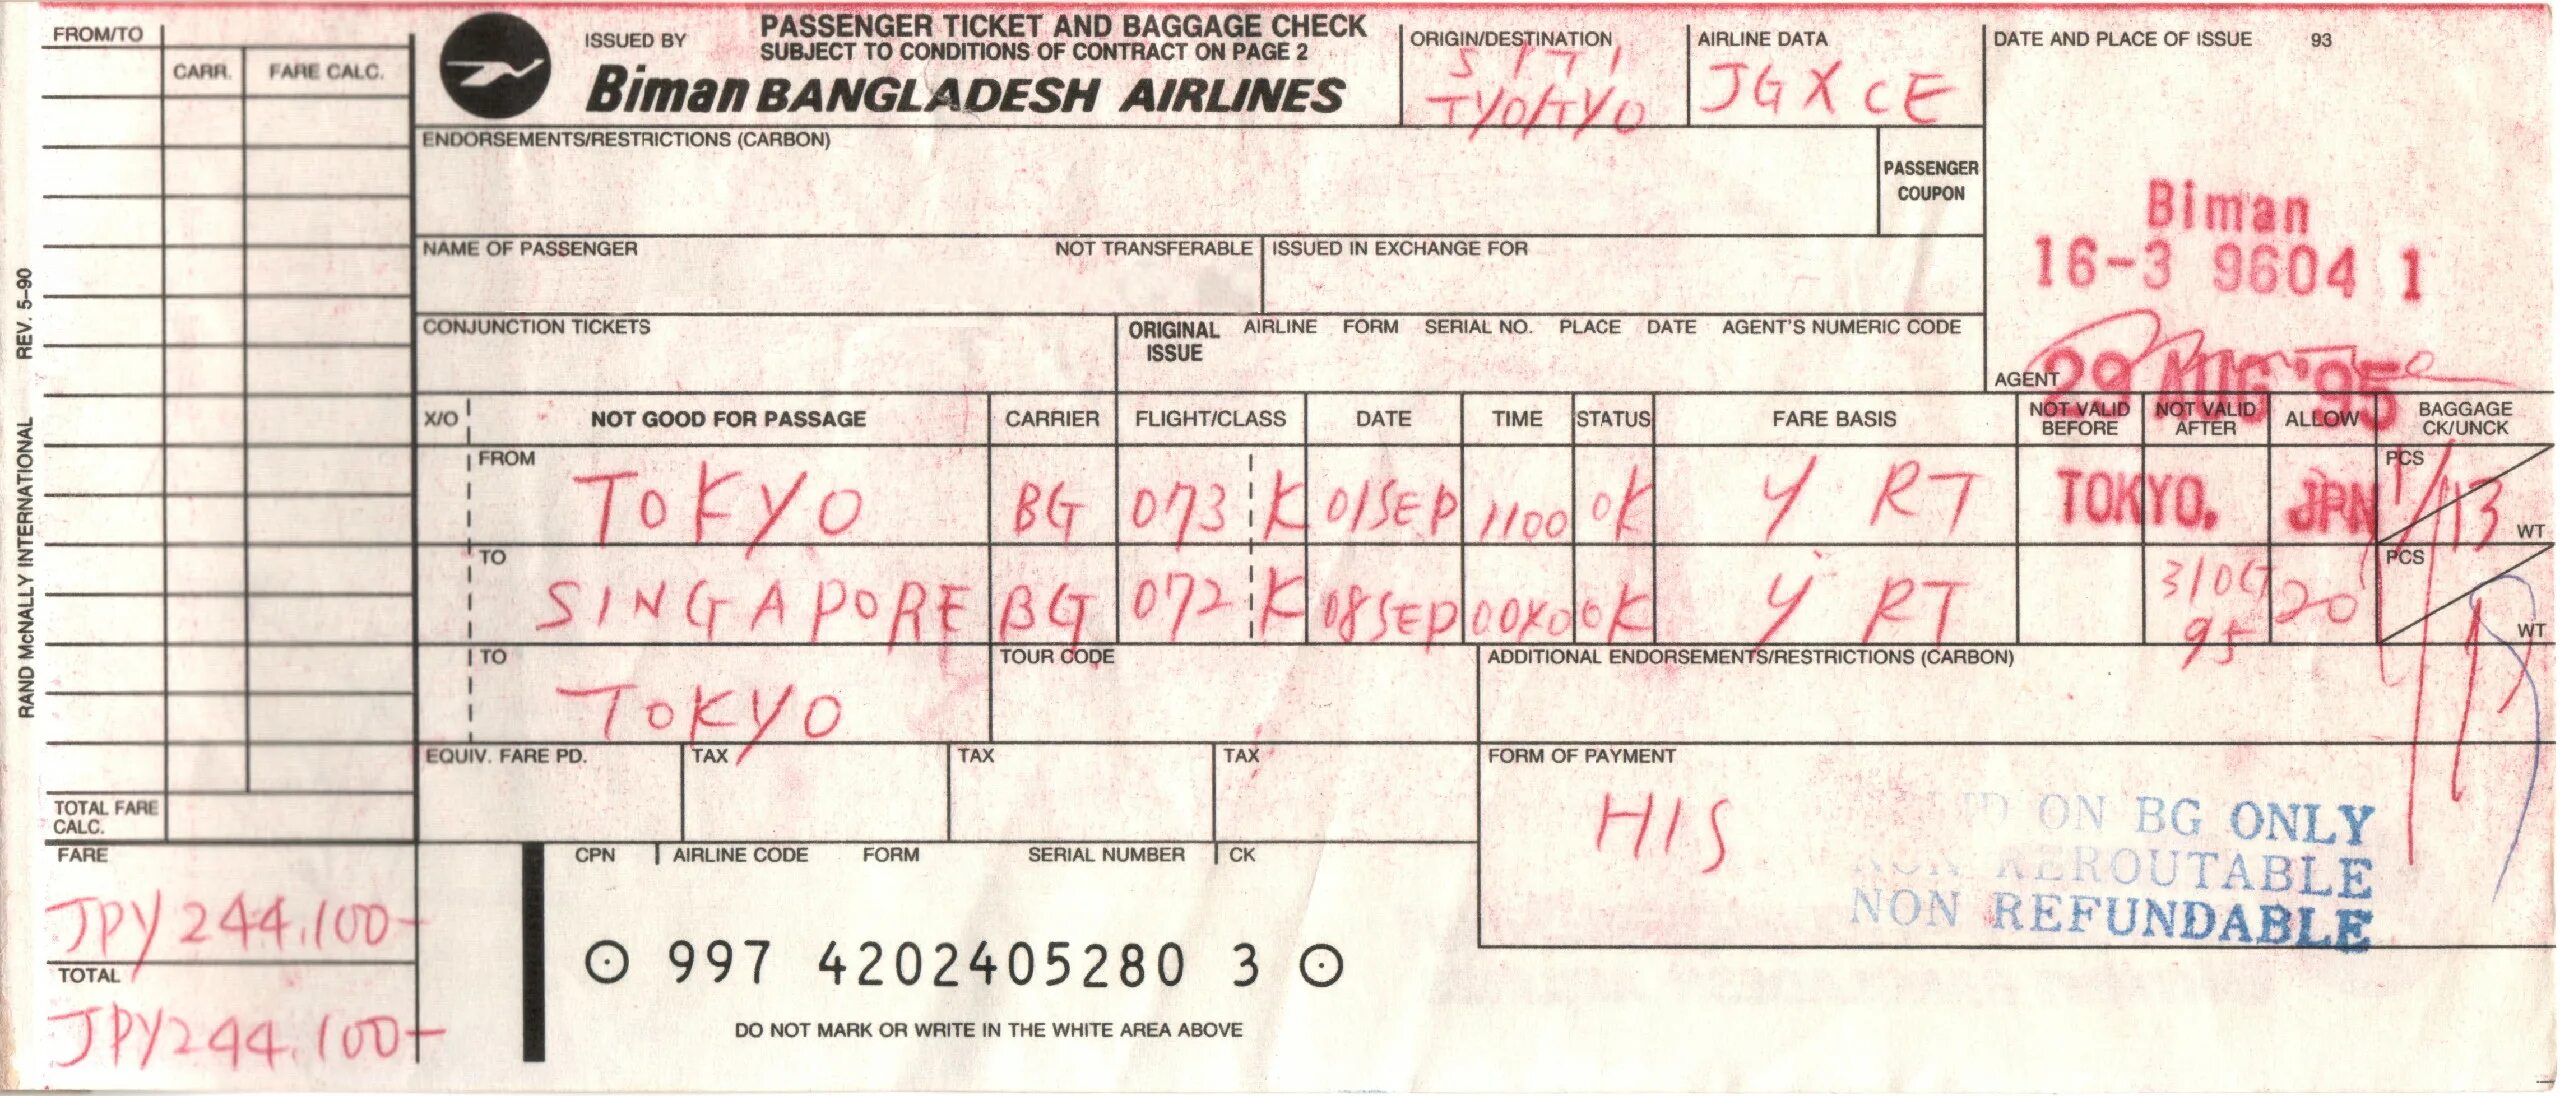 Ticket issued. Бангладеш билеты. Baggage ticket number. Эфиопские авиалинии бланк возврата. Check my ticket.